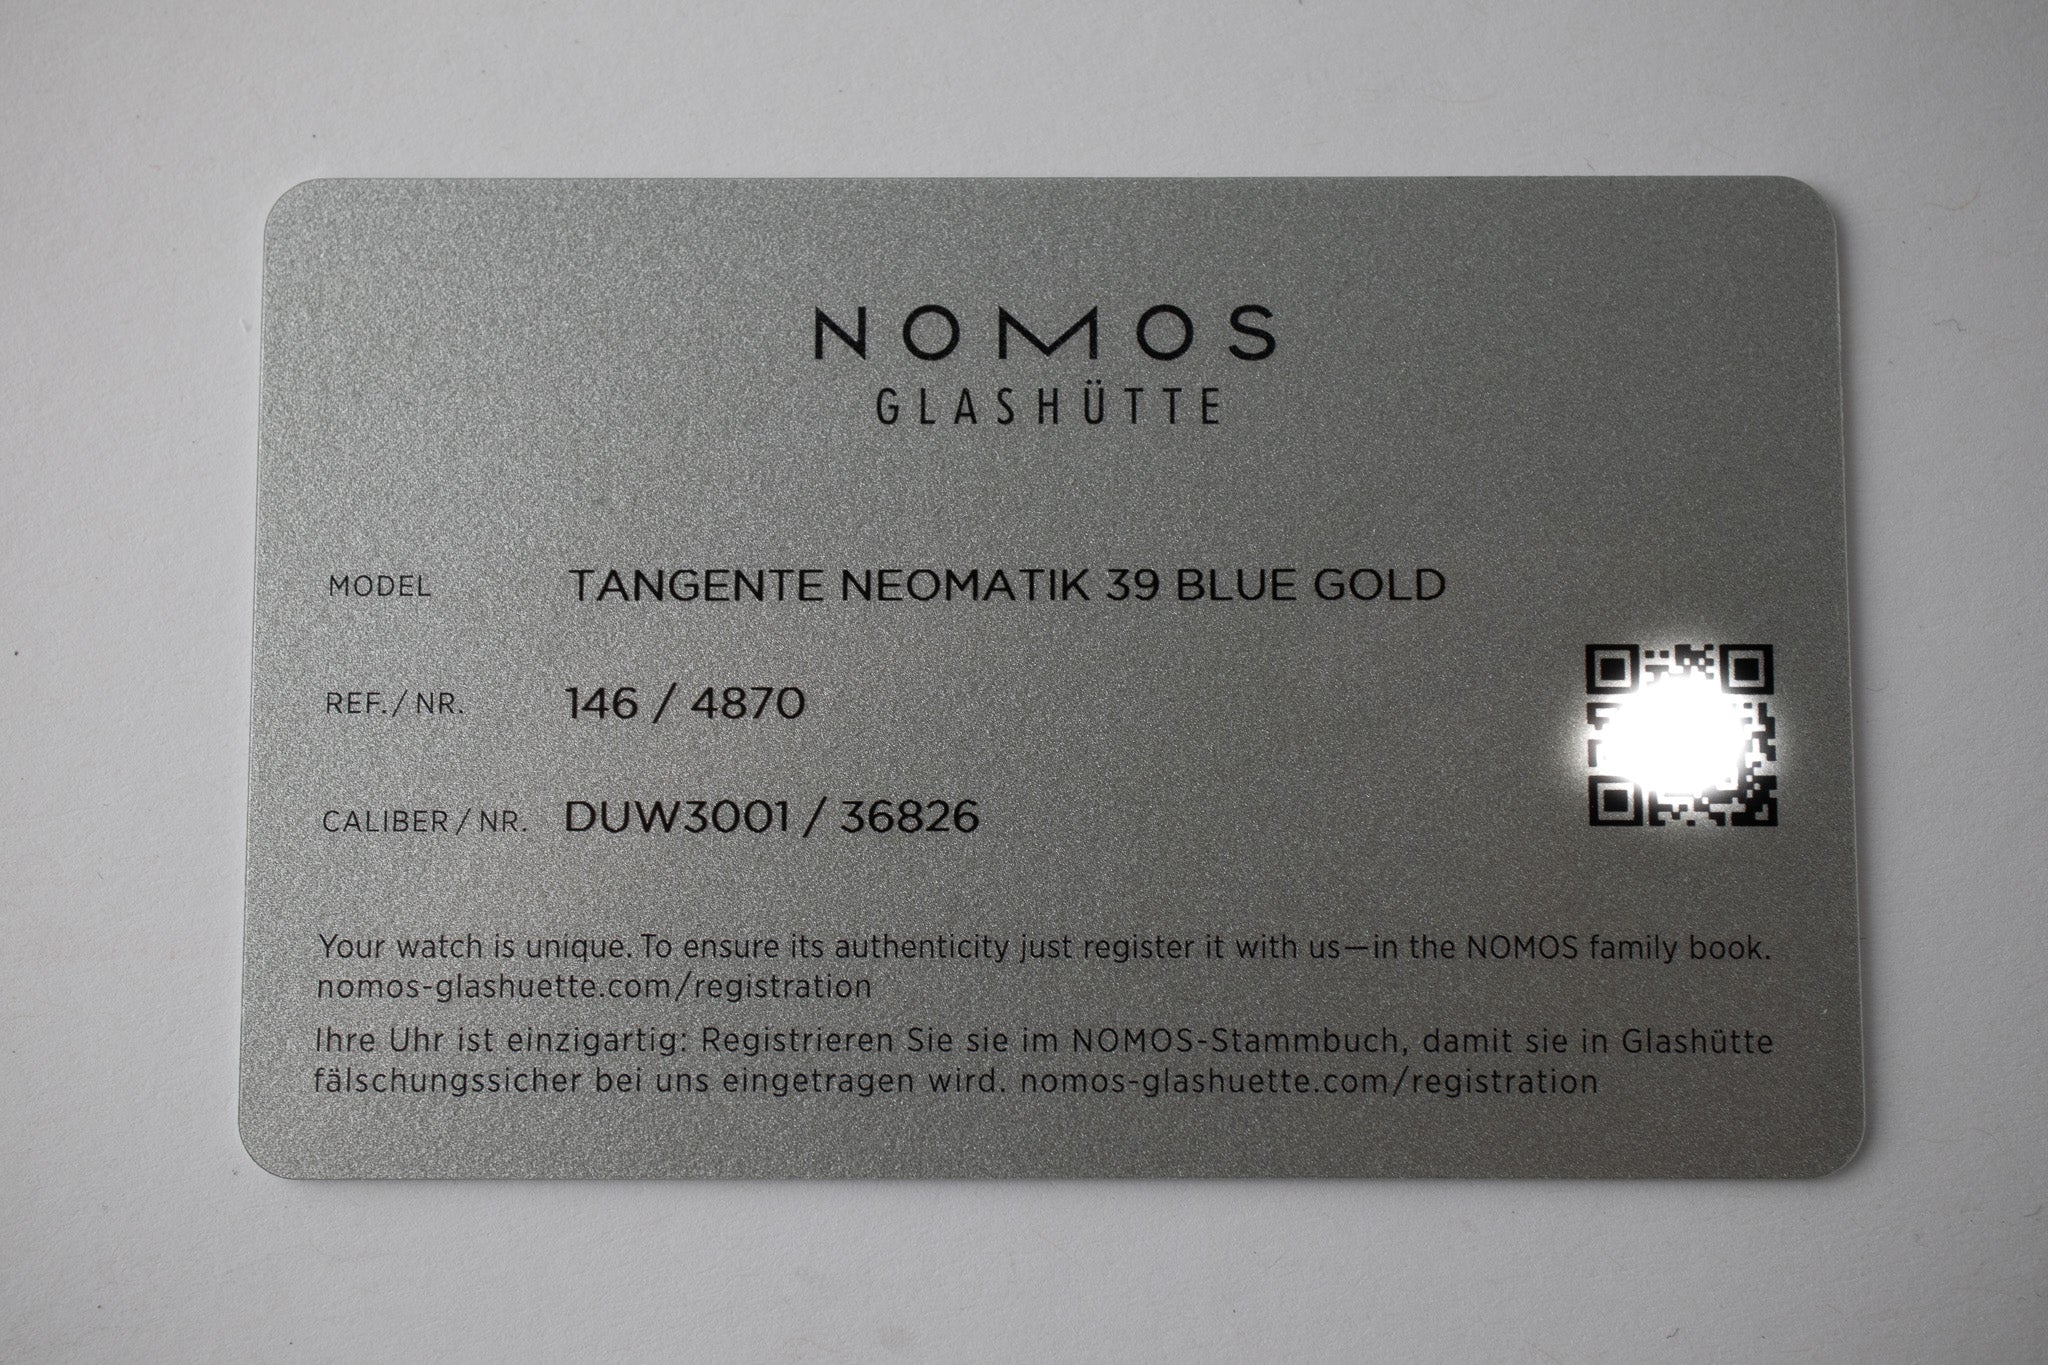 Nomos Tangente Neomatik 39 Blue Gold 146